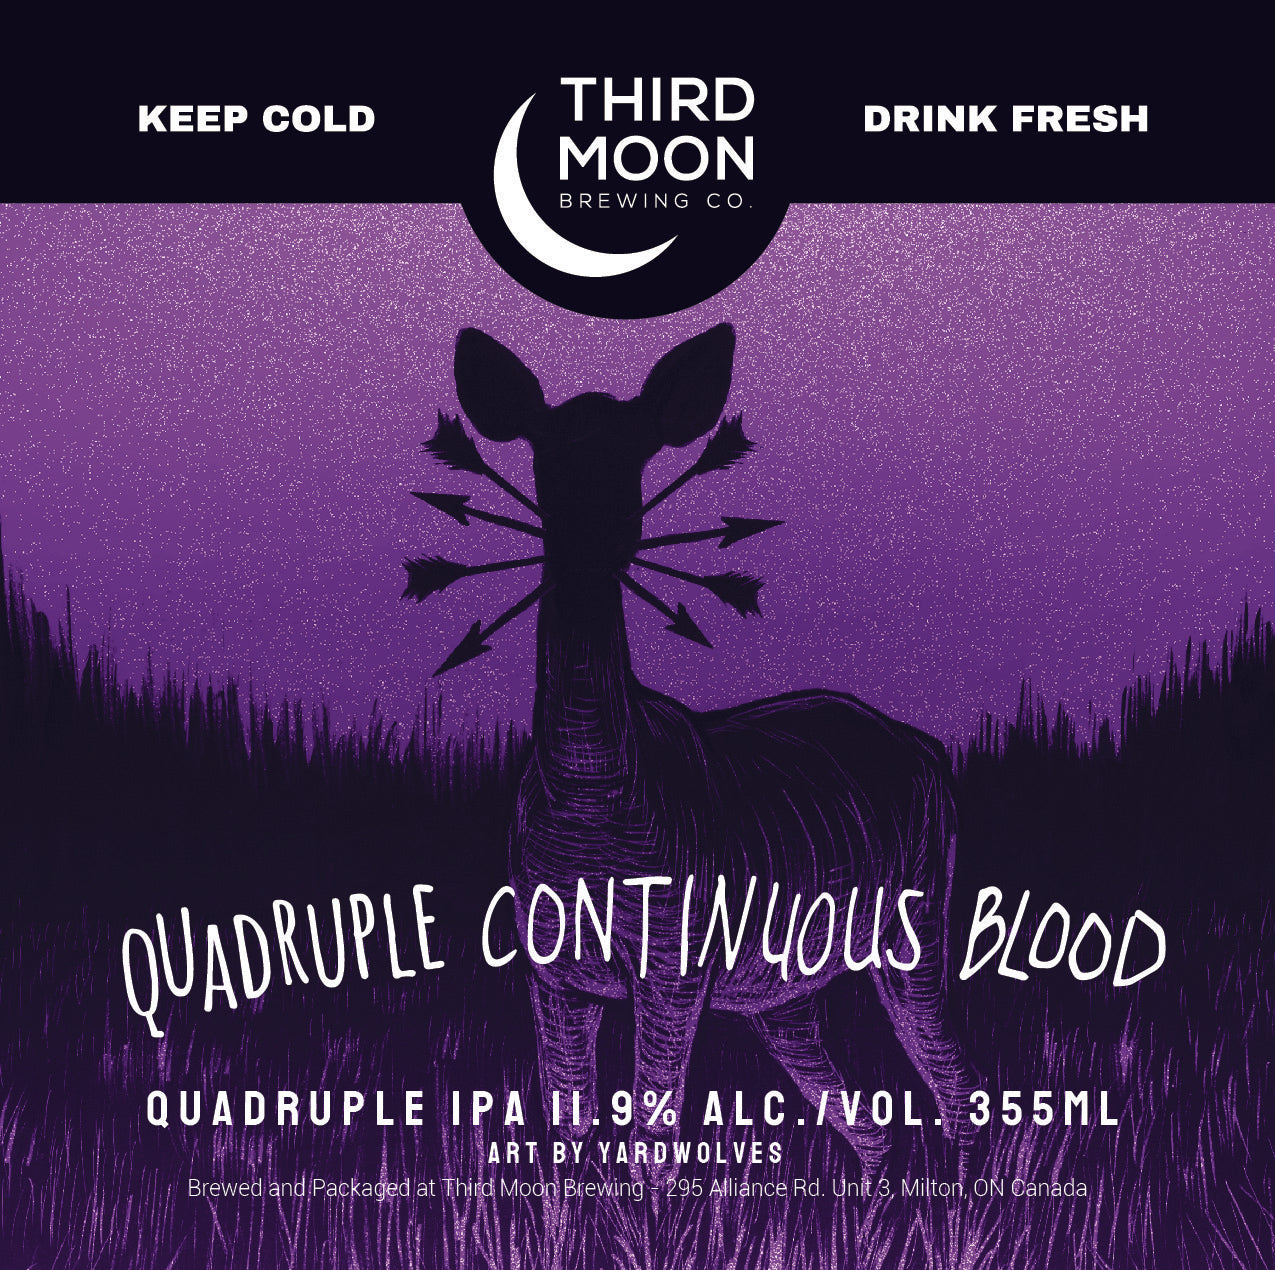 Quad IPA - 4-pk of "Quadruple Continuous Blood" 355mL cans